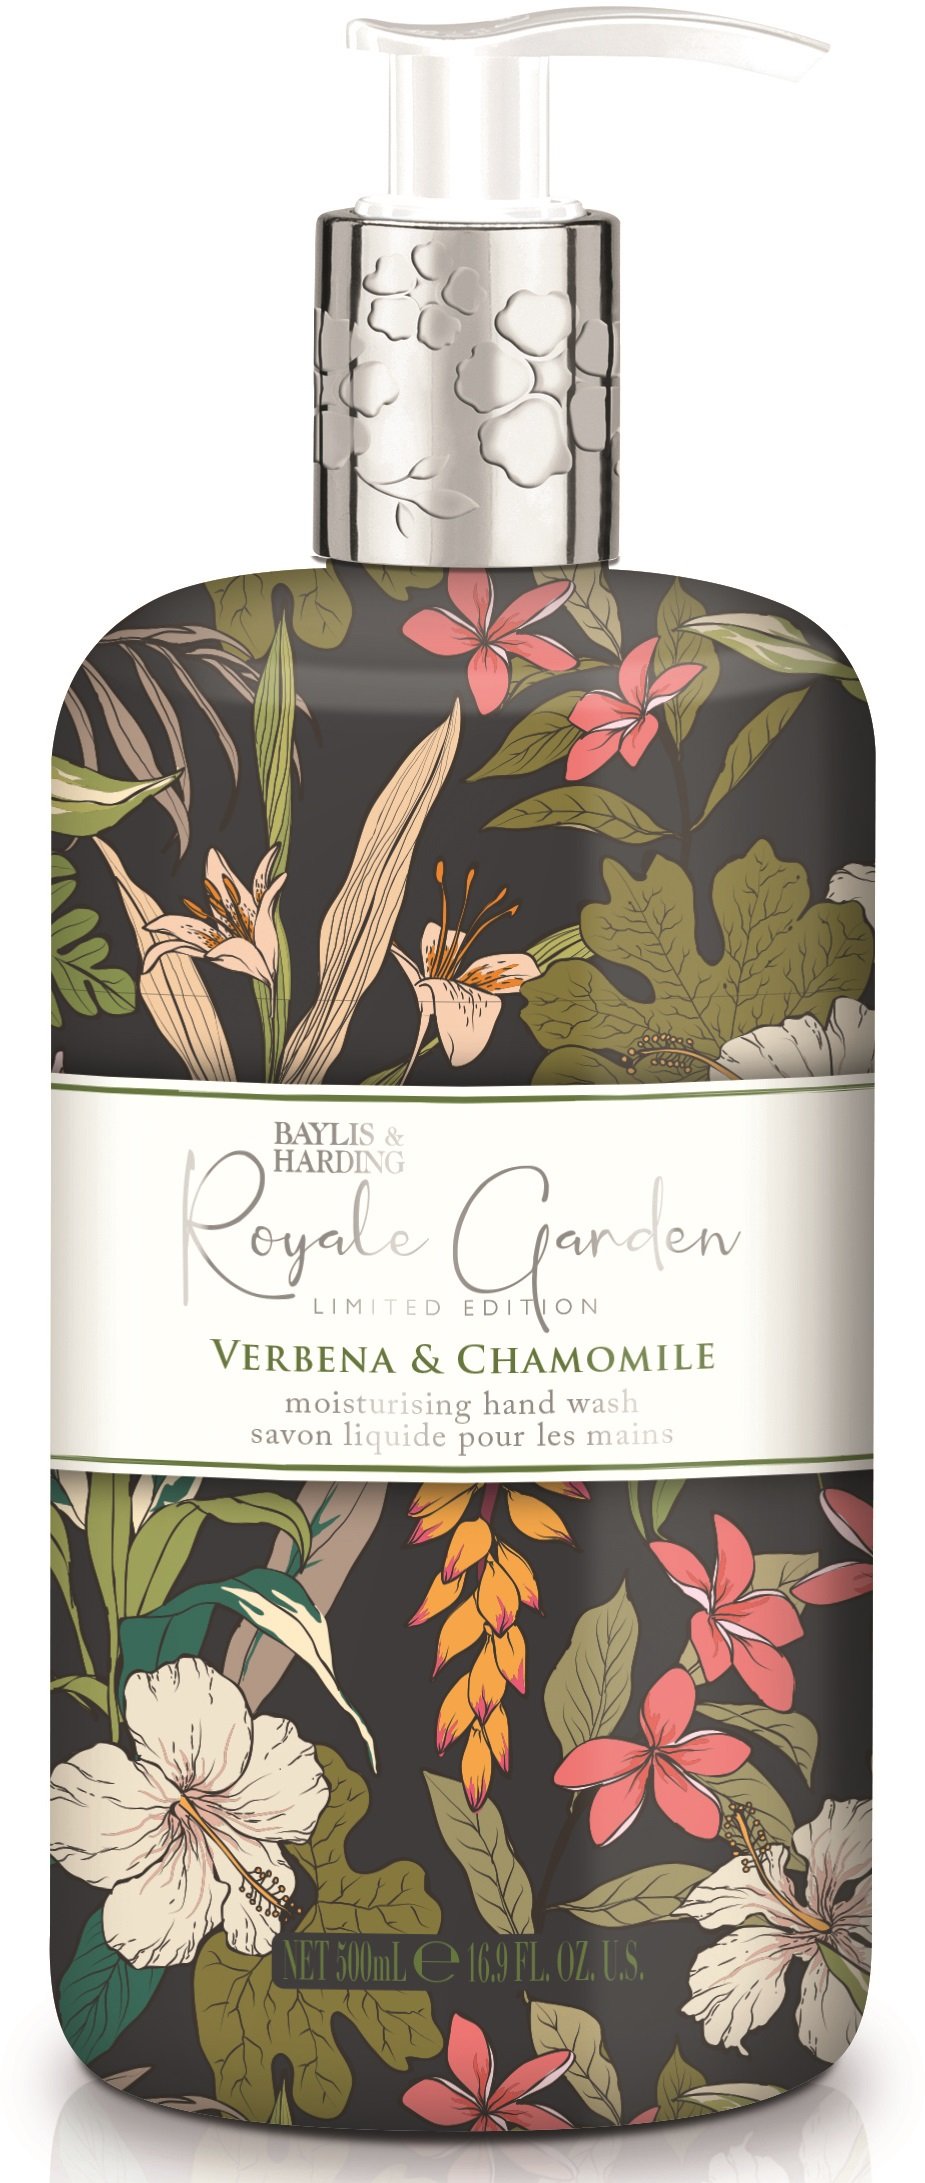 Baylis & Harding Royale Garden Verbena & Chamomile Hand Wash 500 ml